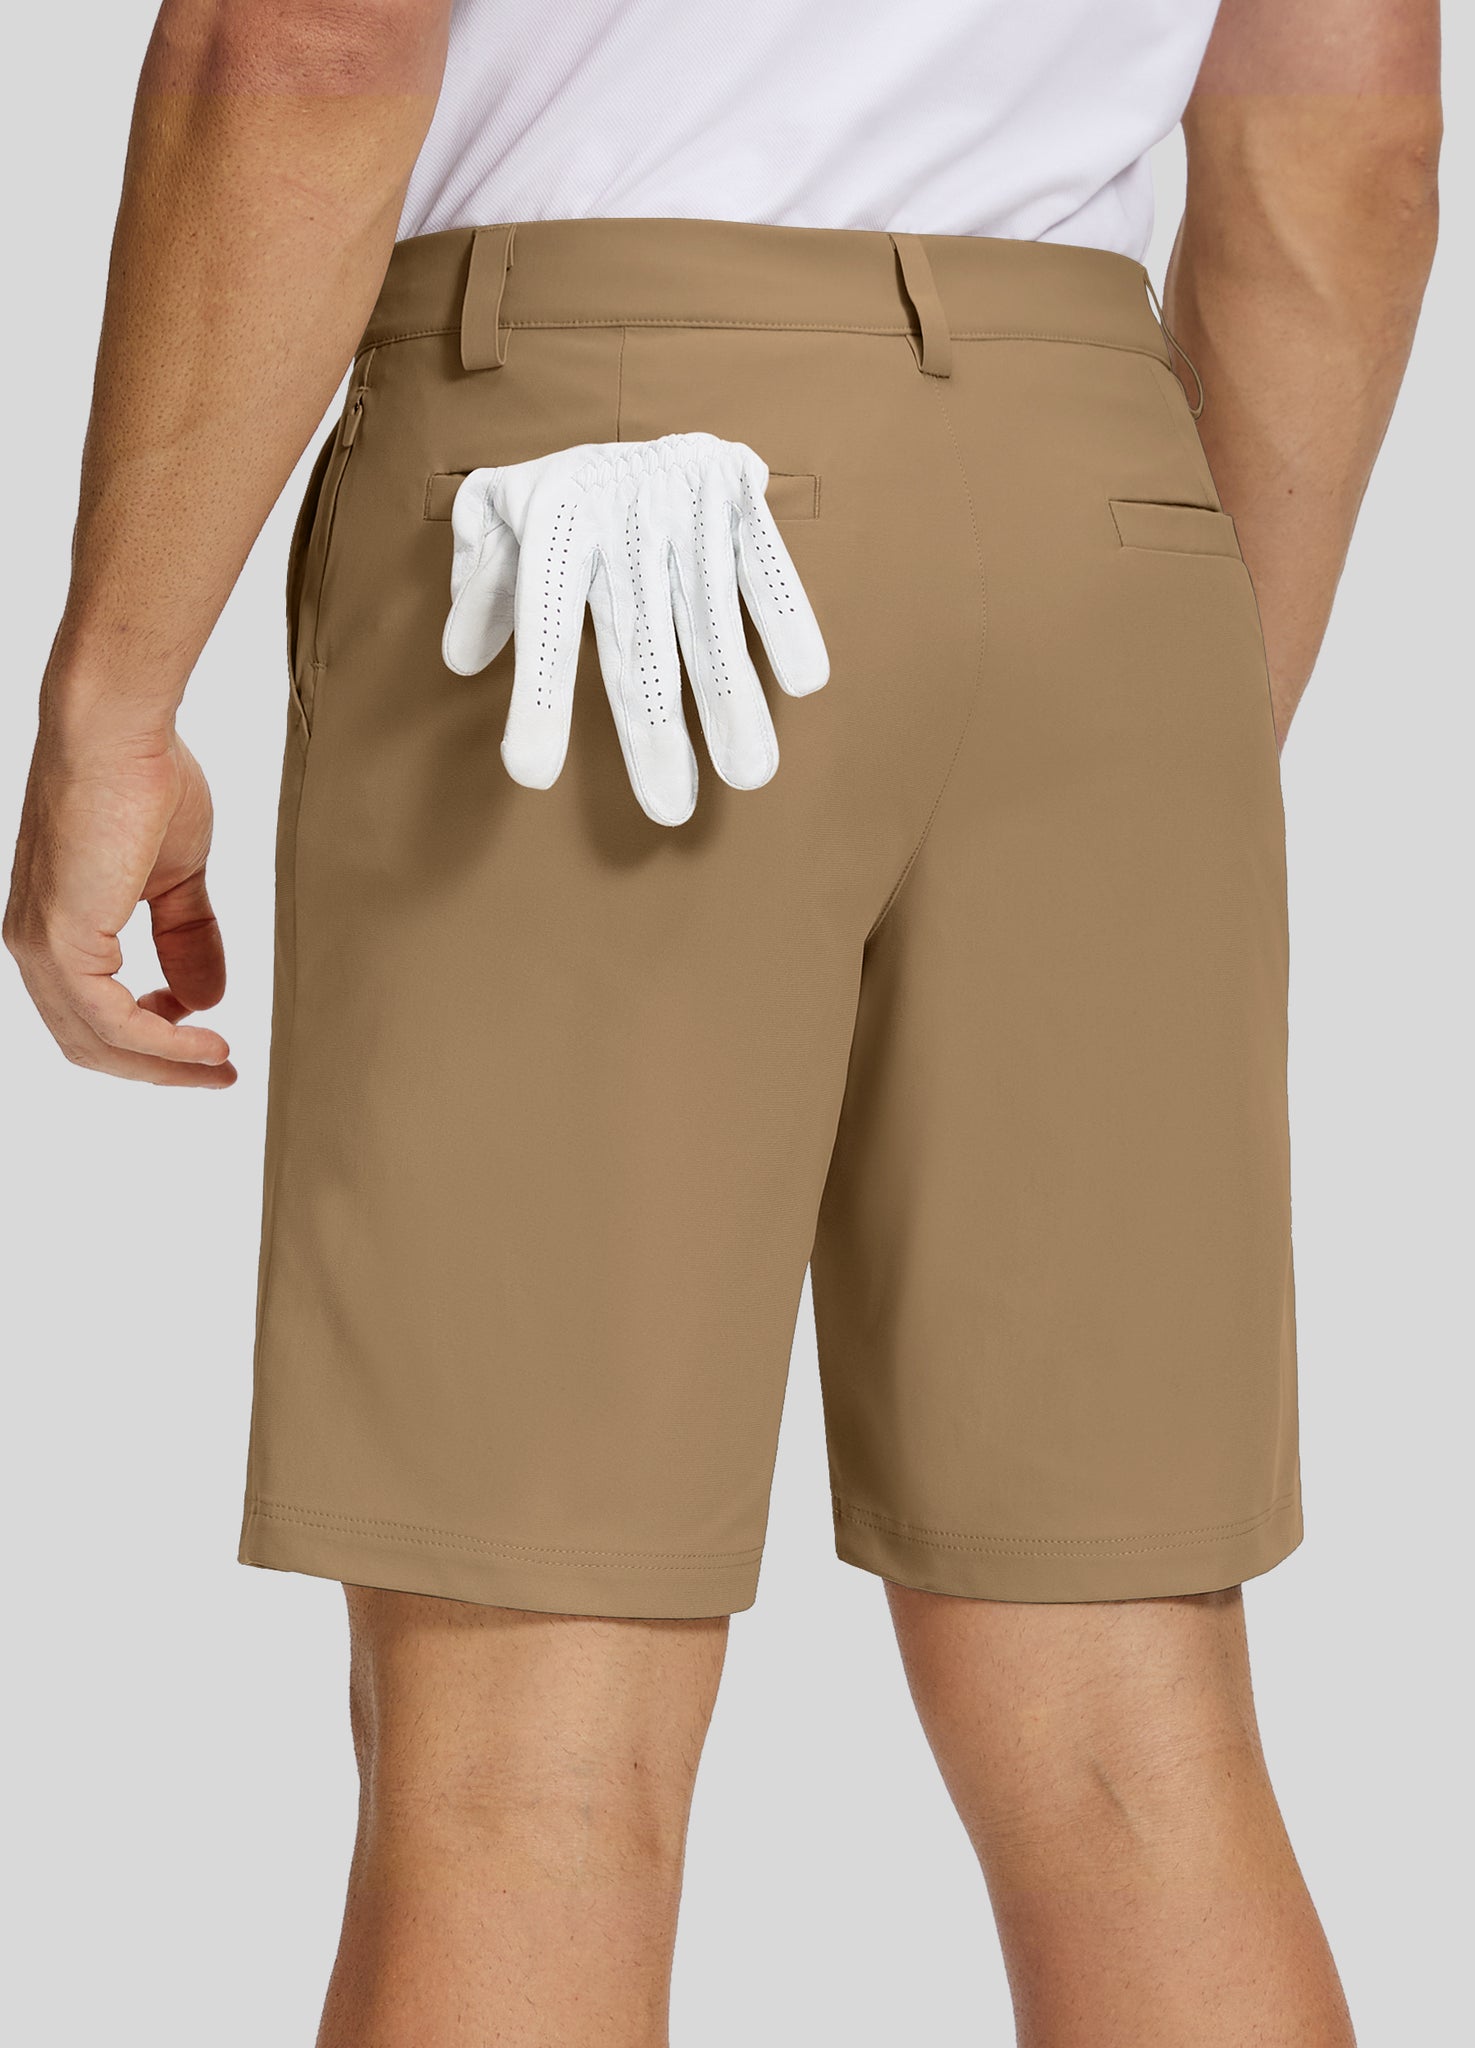 Men's Casual Golf Shorts 9 Inch